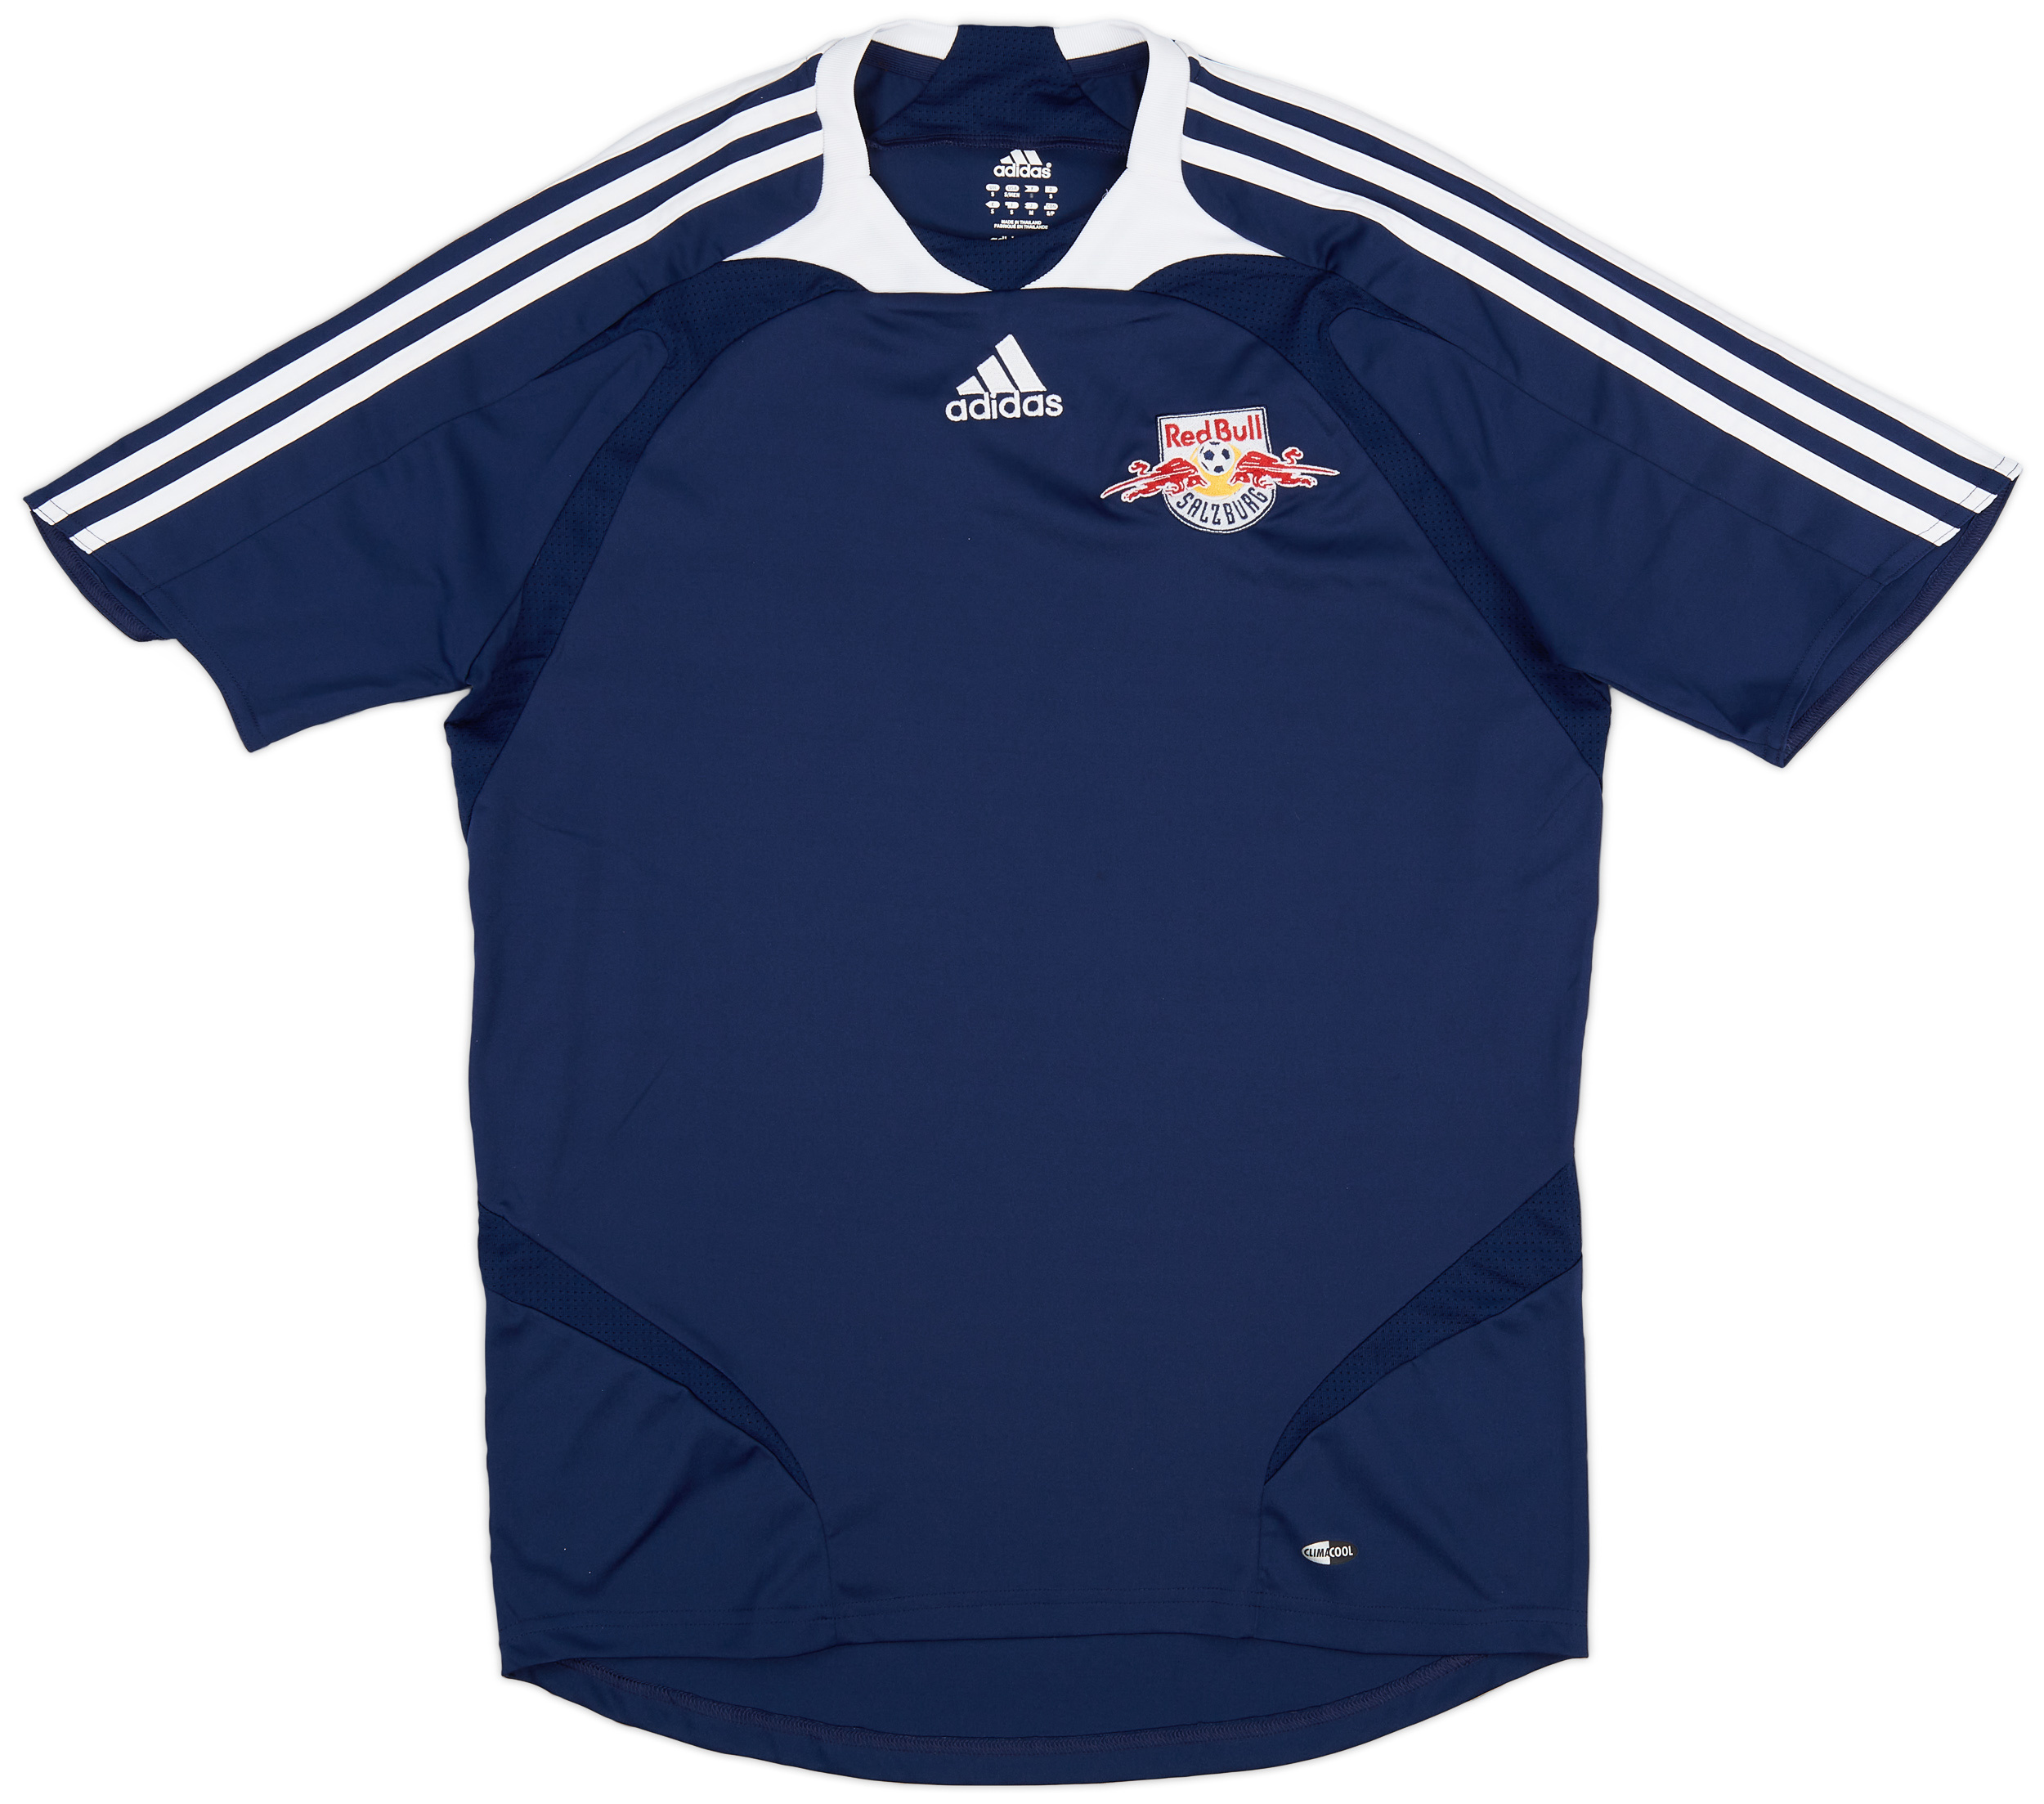 2007-08 Red Bull Salzburg Away Shirt - 9/10 - ()